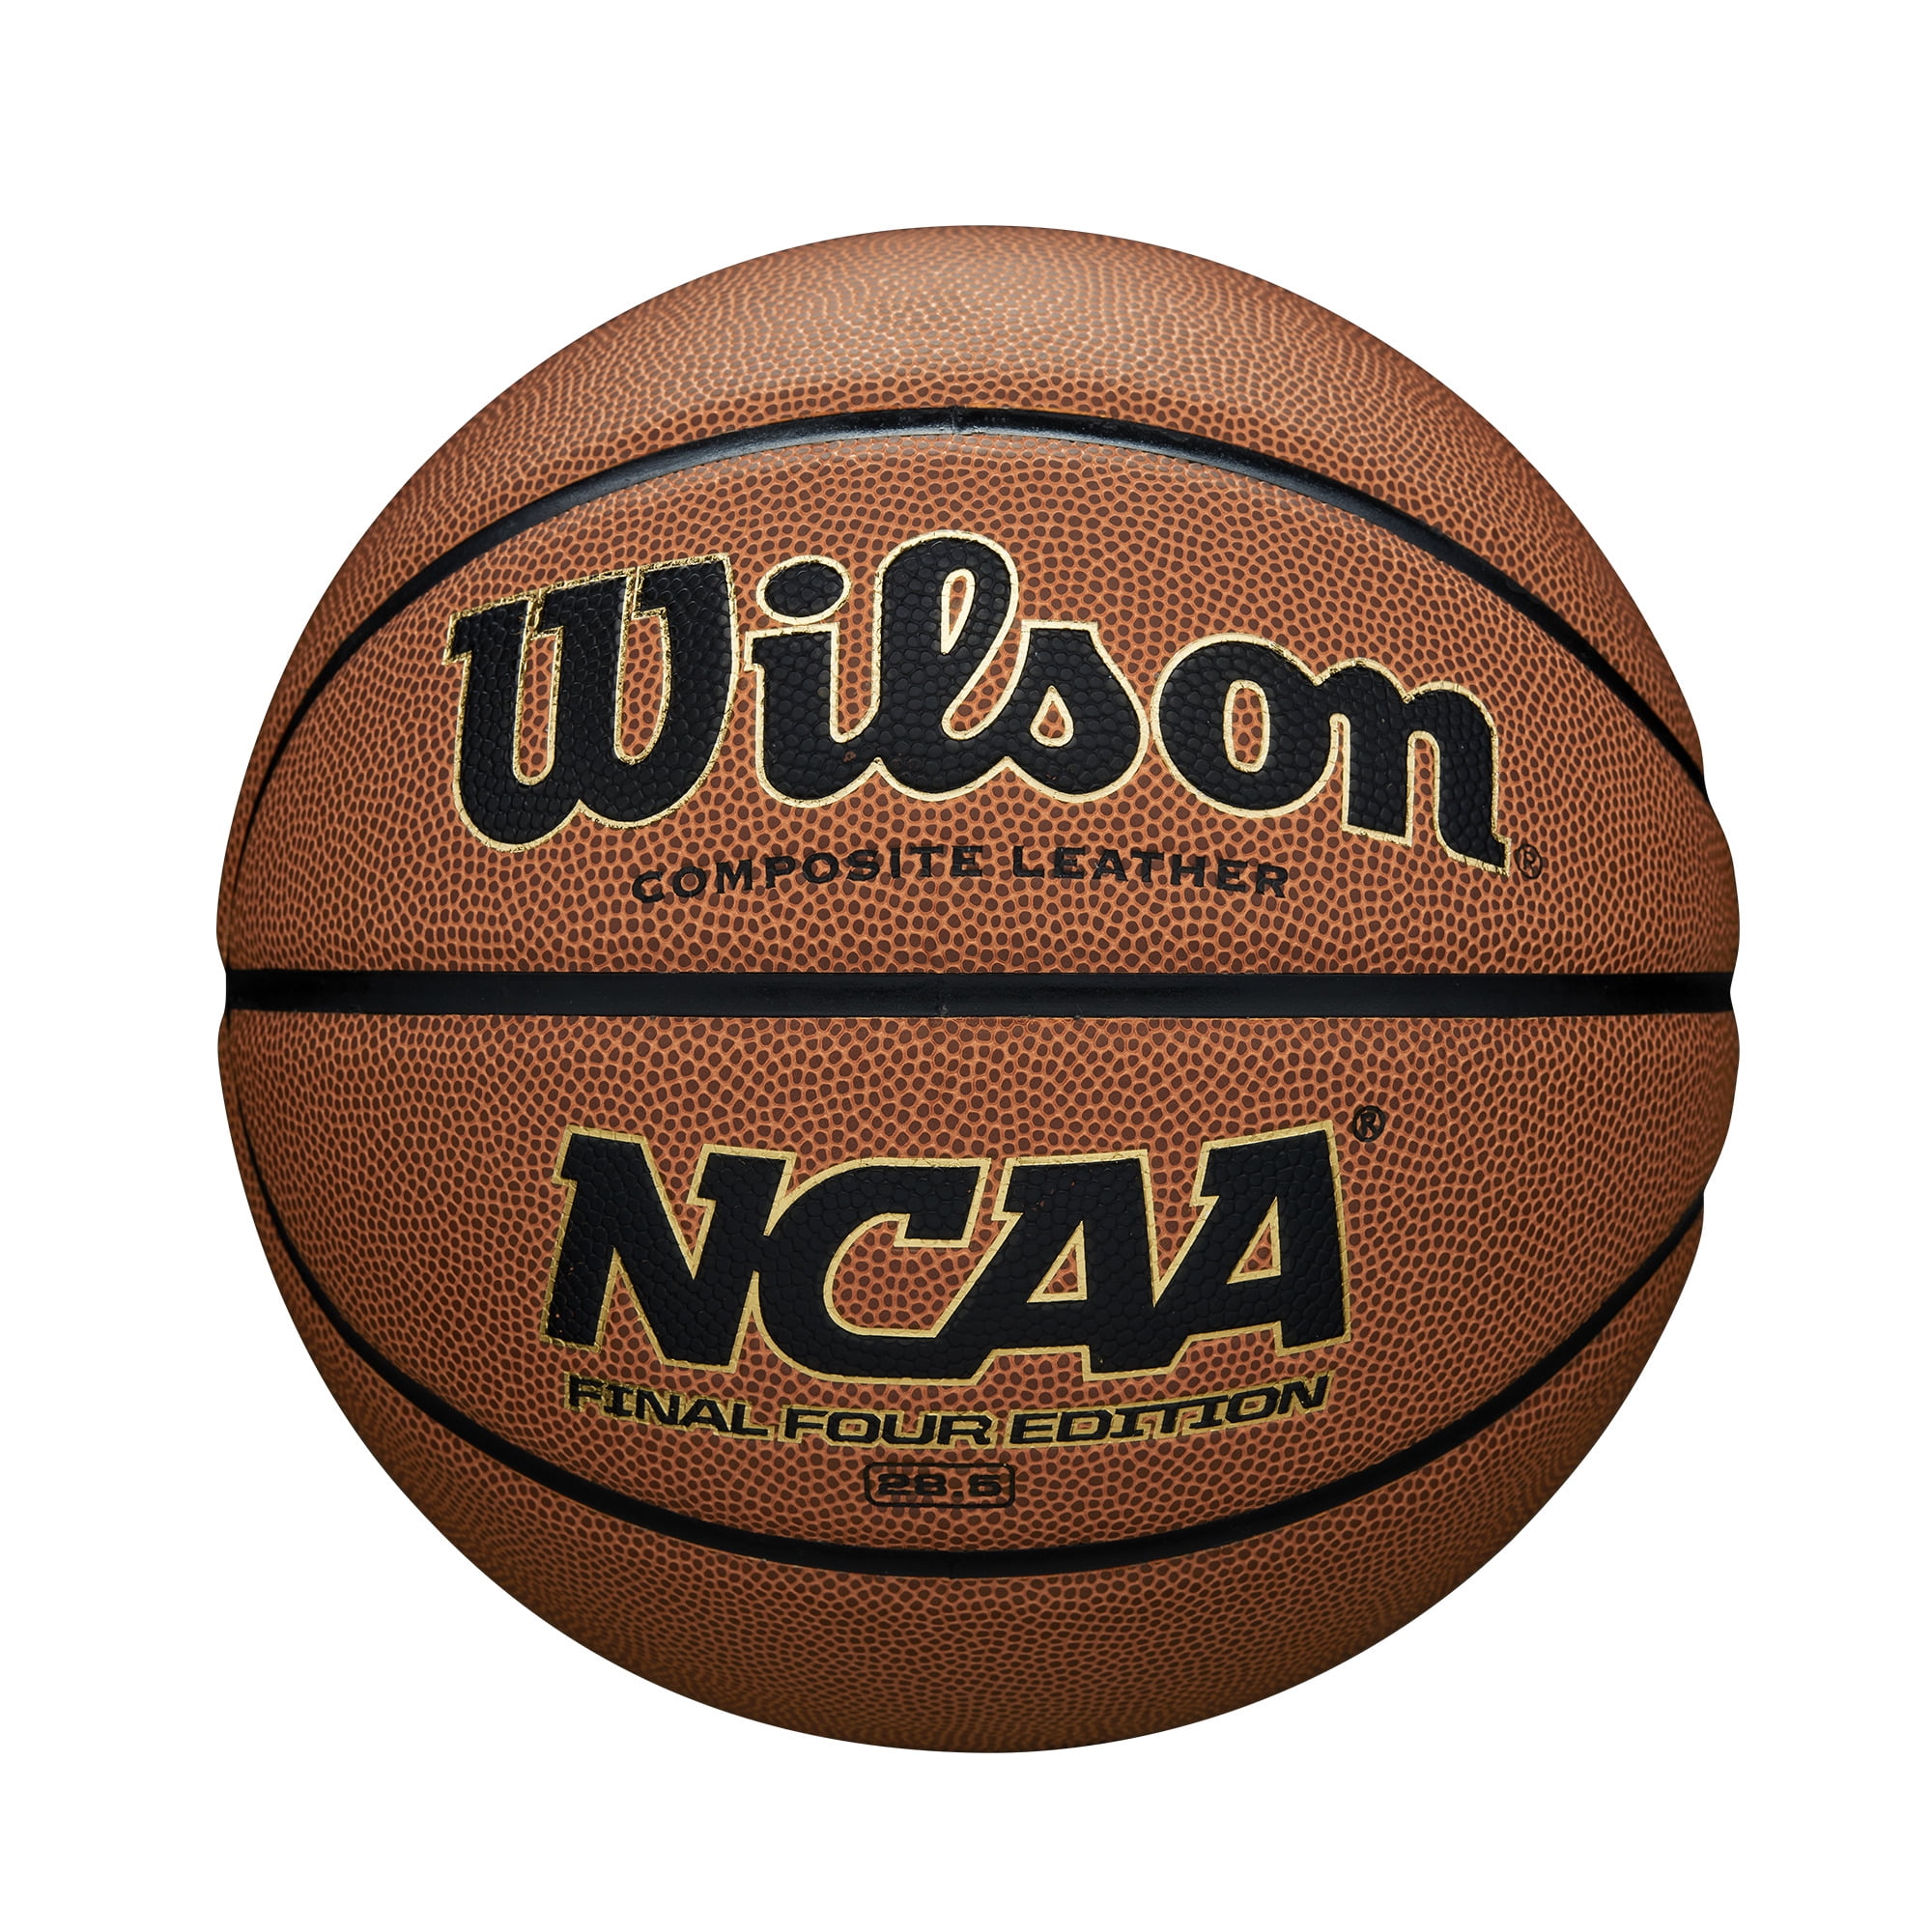 Official Wilson NCAA Final Four Edition Basketball 29.5" 